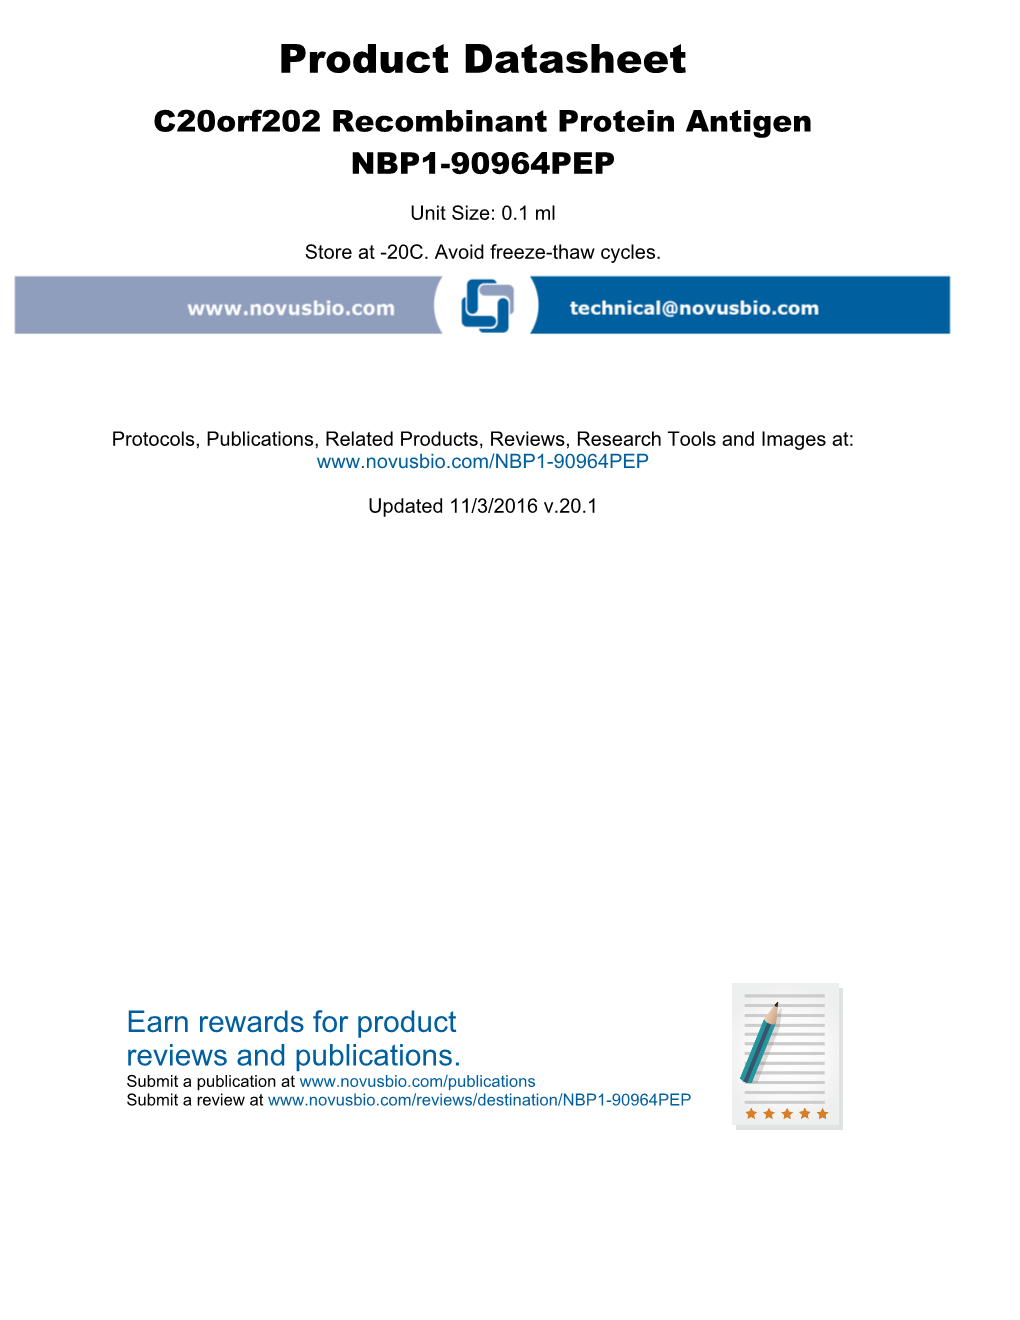 Product Datasheet C20orf202 Recombinant Protein Antigen NBP1